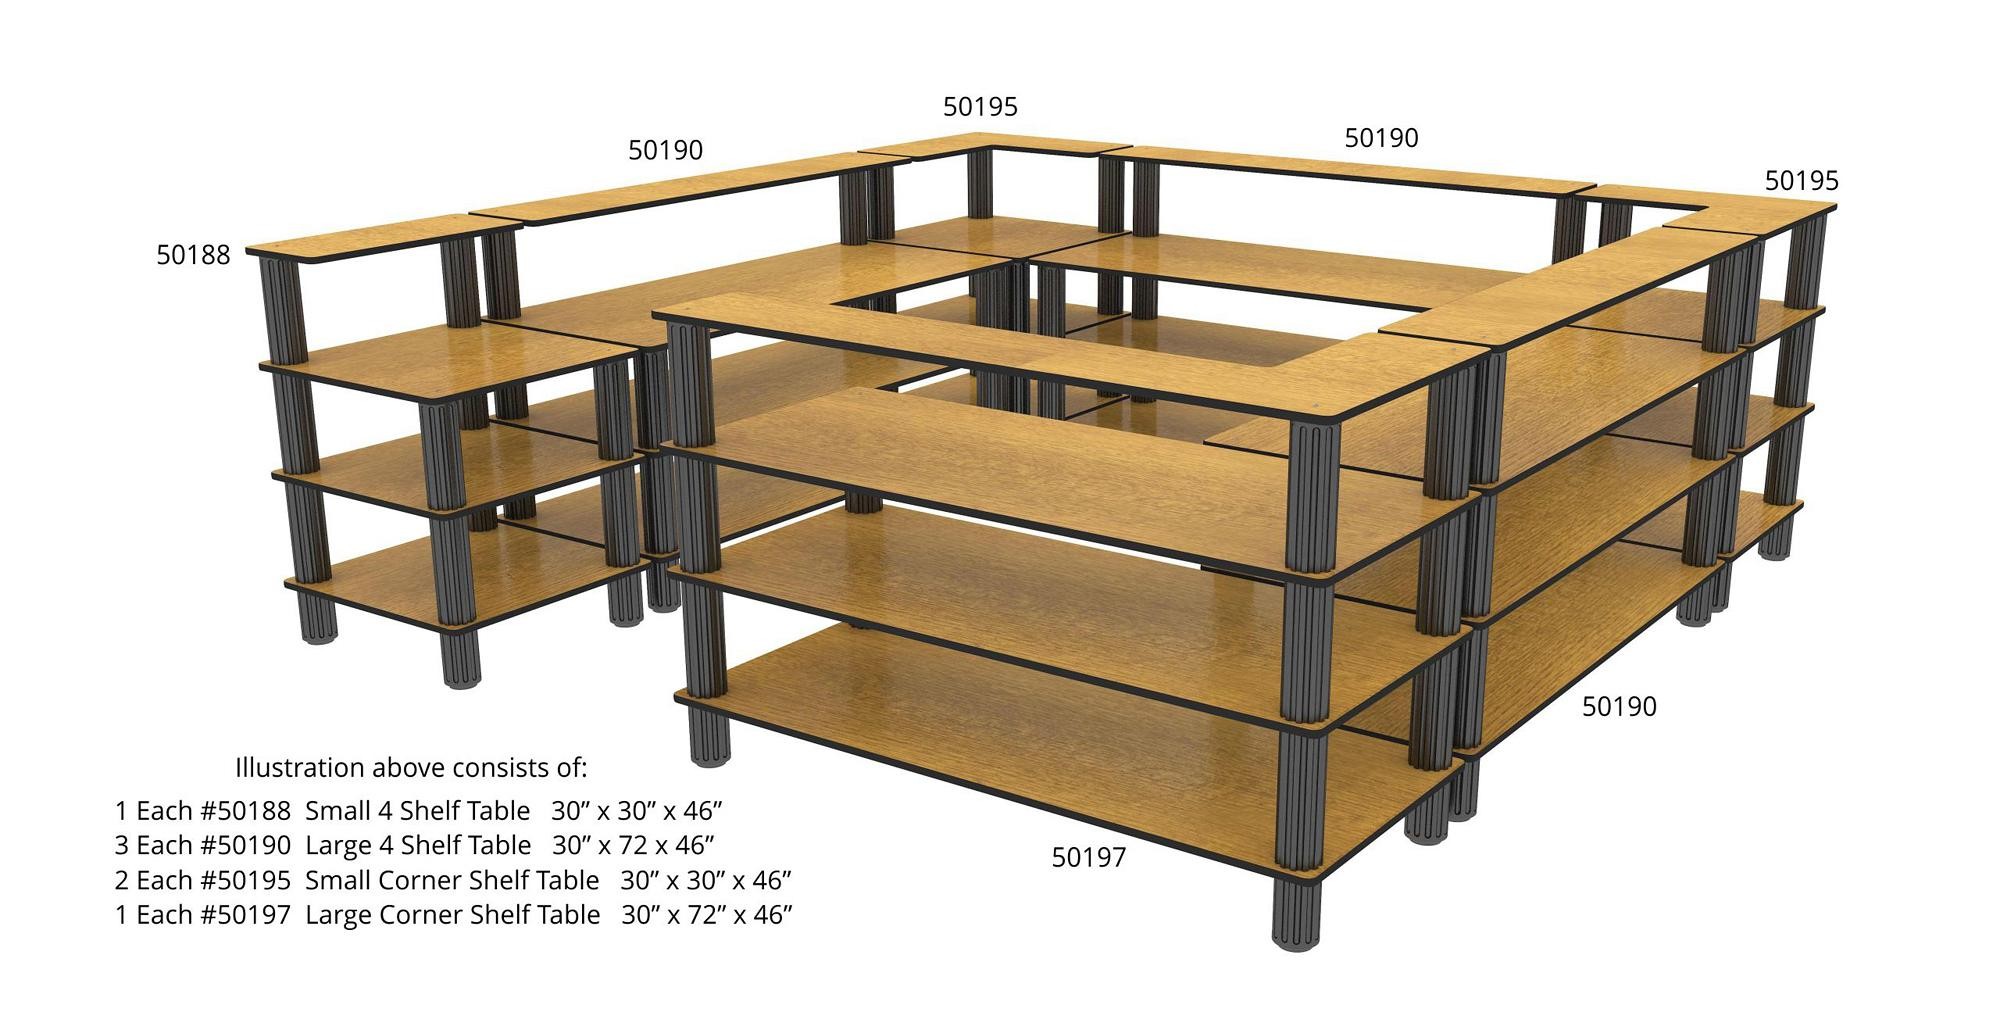 Bon Chef 50190WVWALNUT Large 4-Shelf Flex Table with Walnut Finish, 30" x 72" x 46"